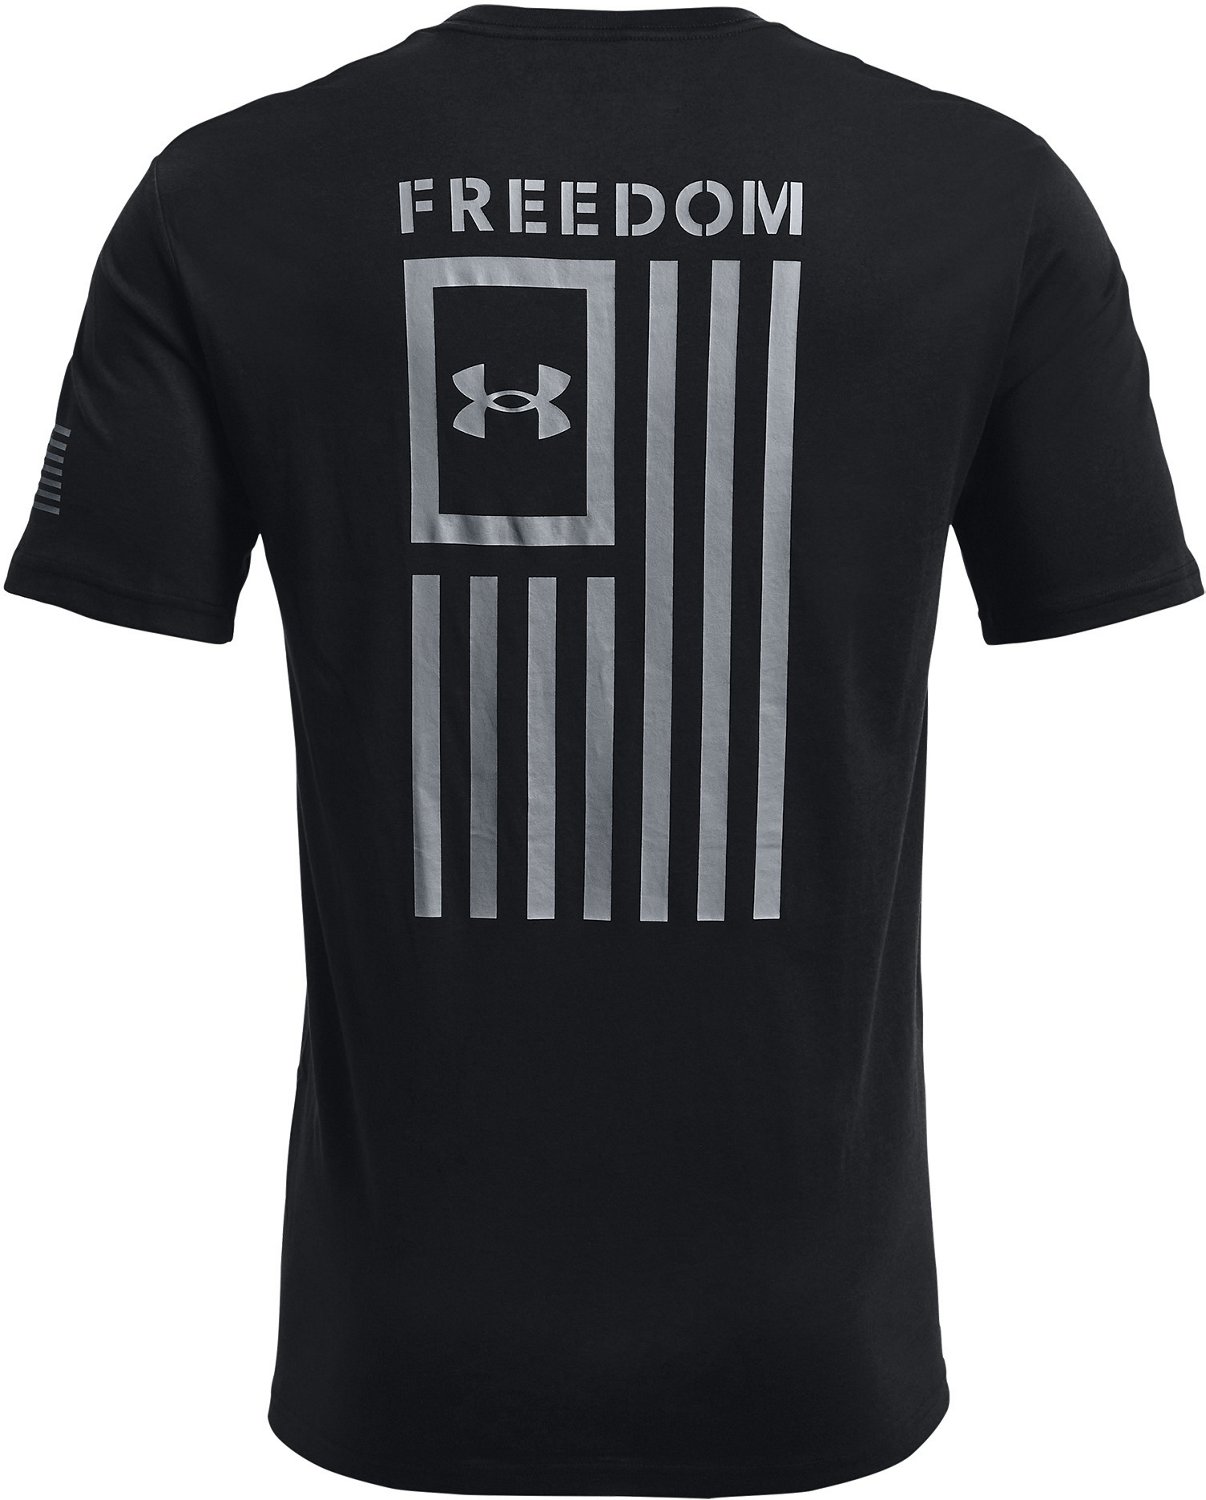 Under Armour Men's Freedom Flag Short Sleeve T-shirt